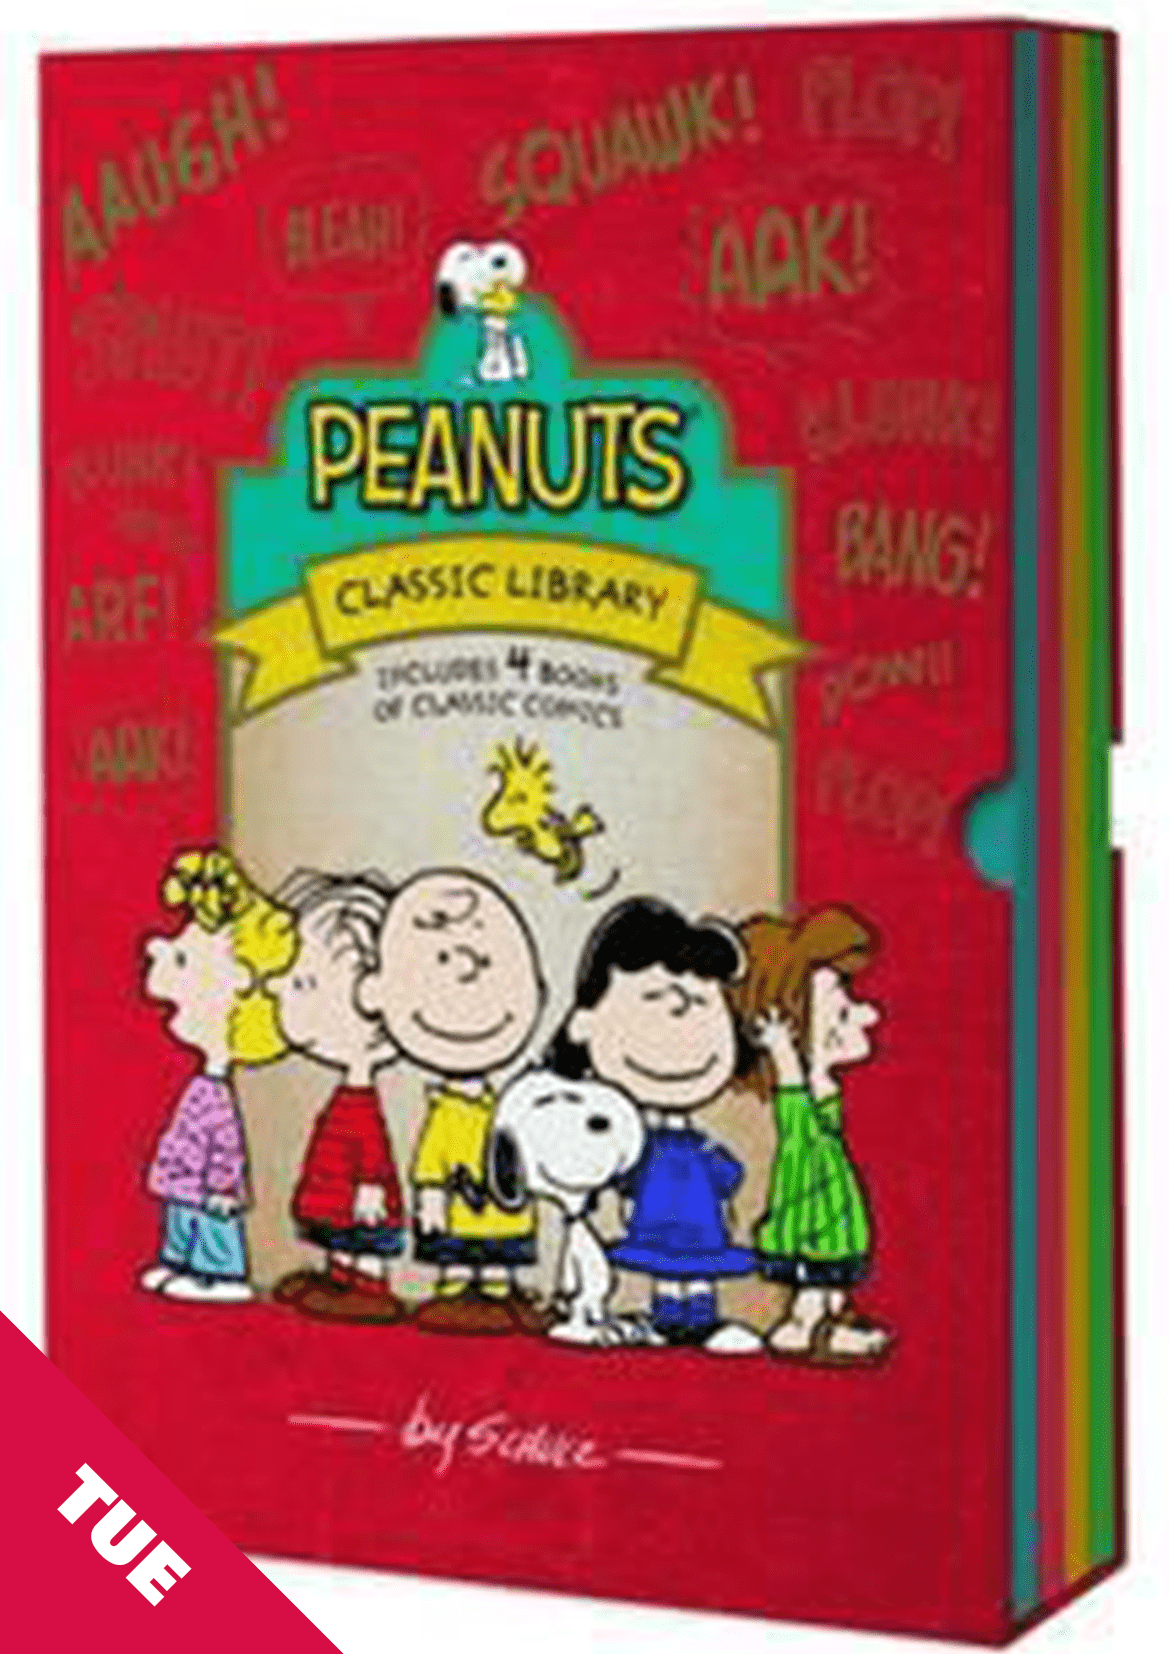 Peanuts: Classic Library Include 4 Book Of Classic Comics